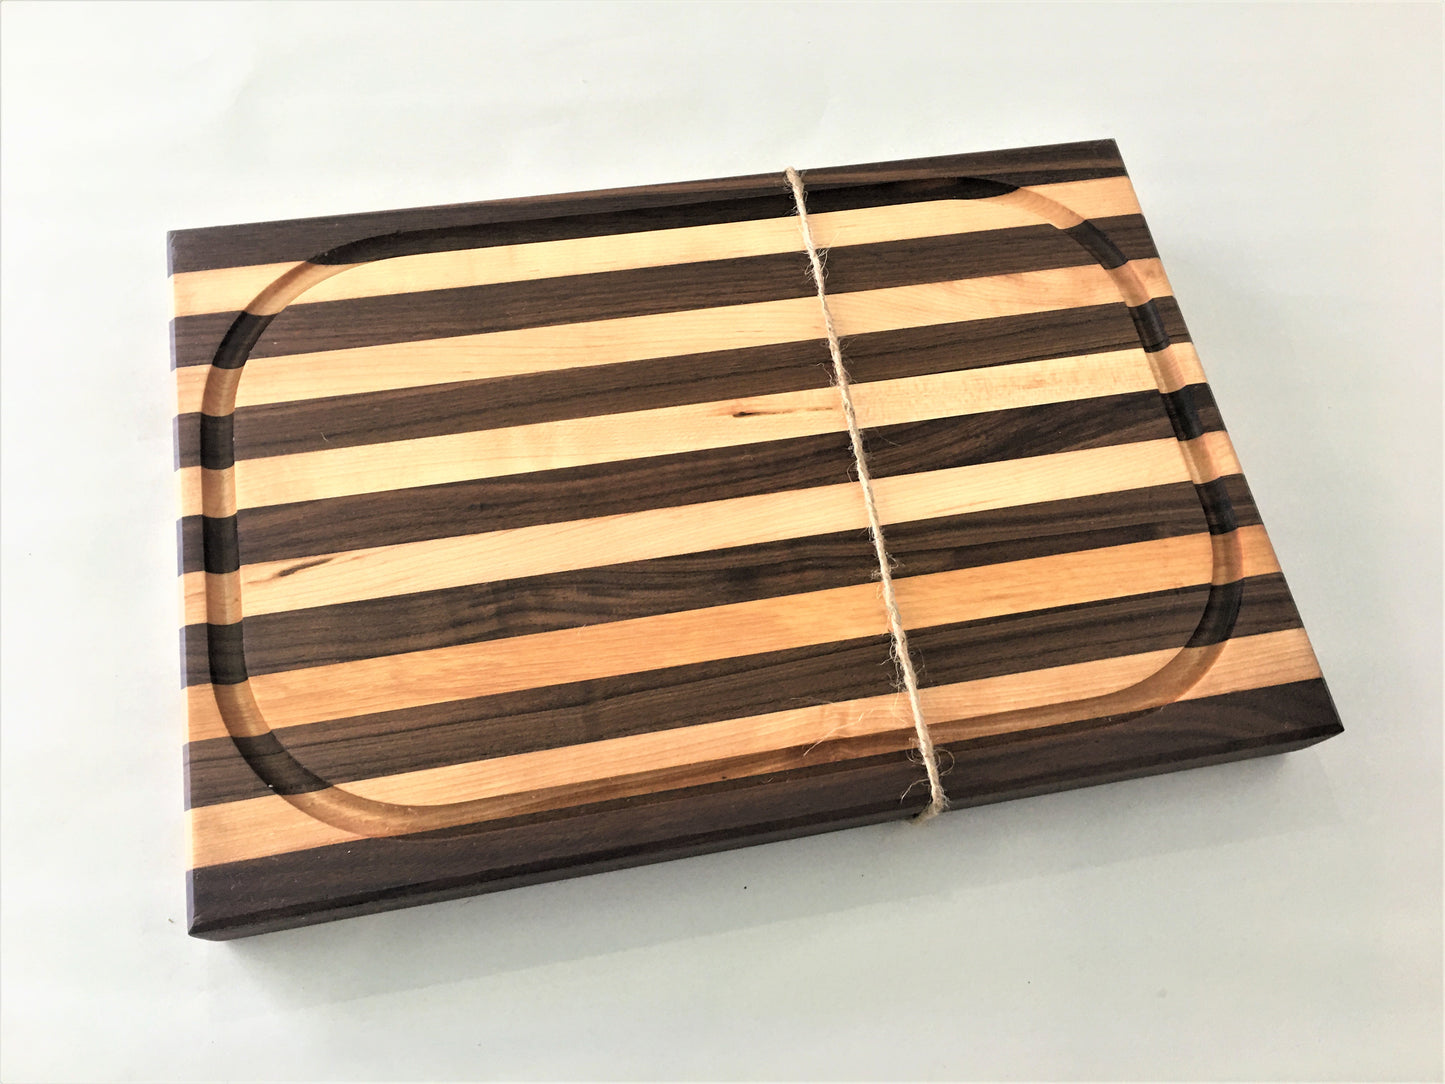 Hiawatha WoodWorks Edge Grain Black Walnut & Hard Maple Cutting Board 11″ x 17″ x 1 1/2″